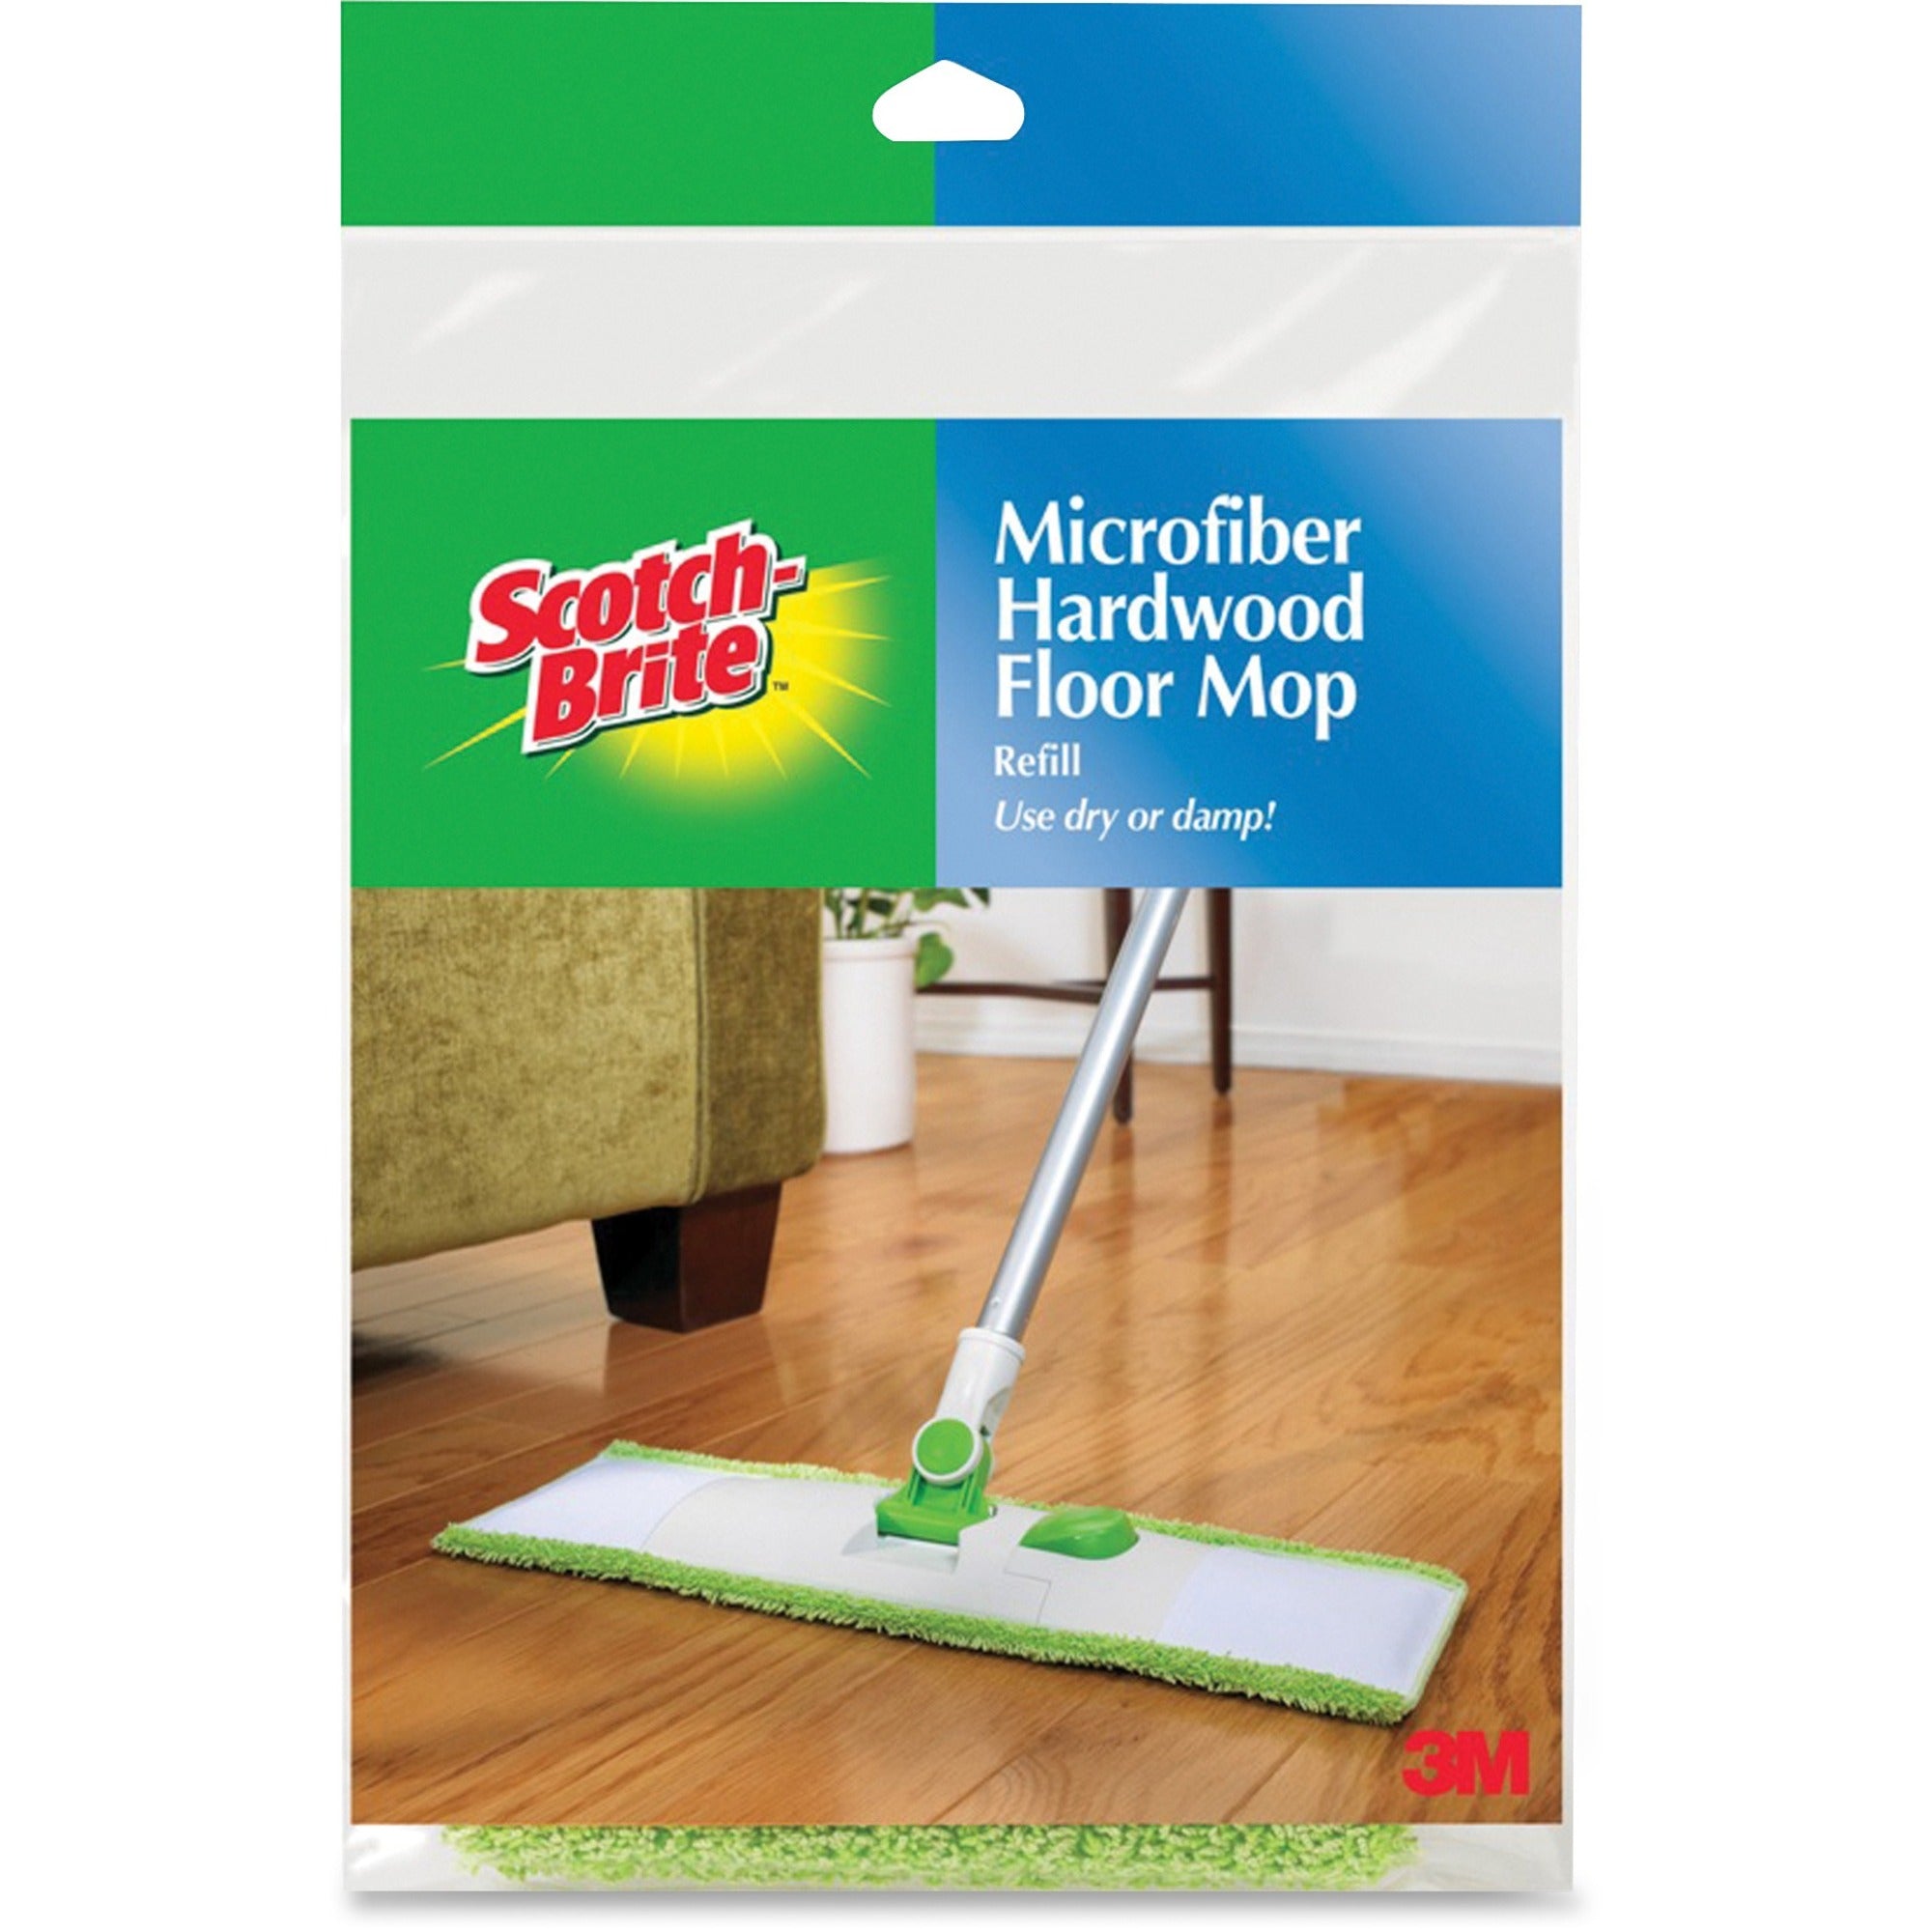 scotch-brite-hardwood-floor-mop-microfiber-6-carton_mmmm005rct - 1